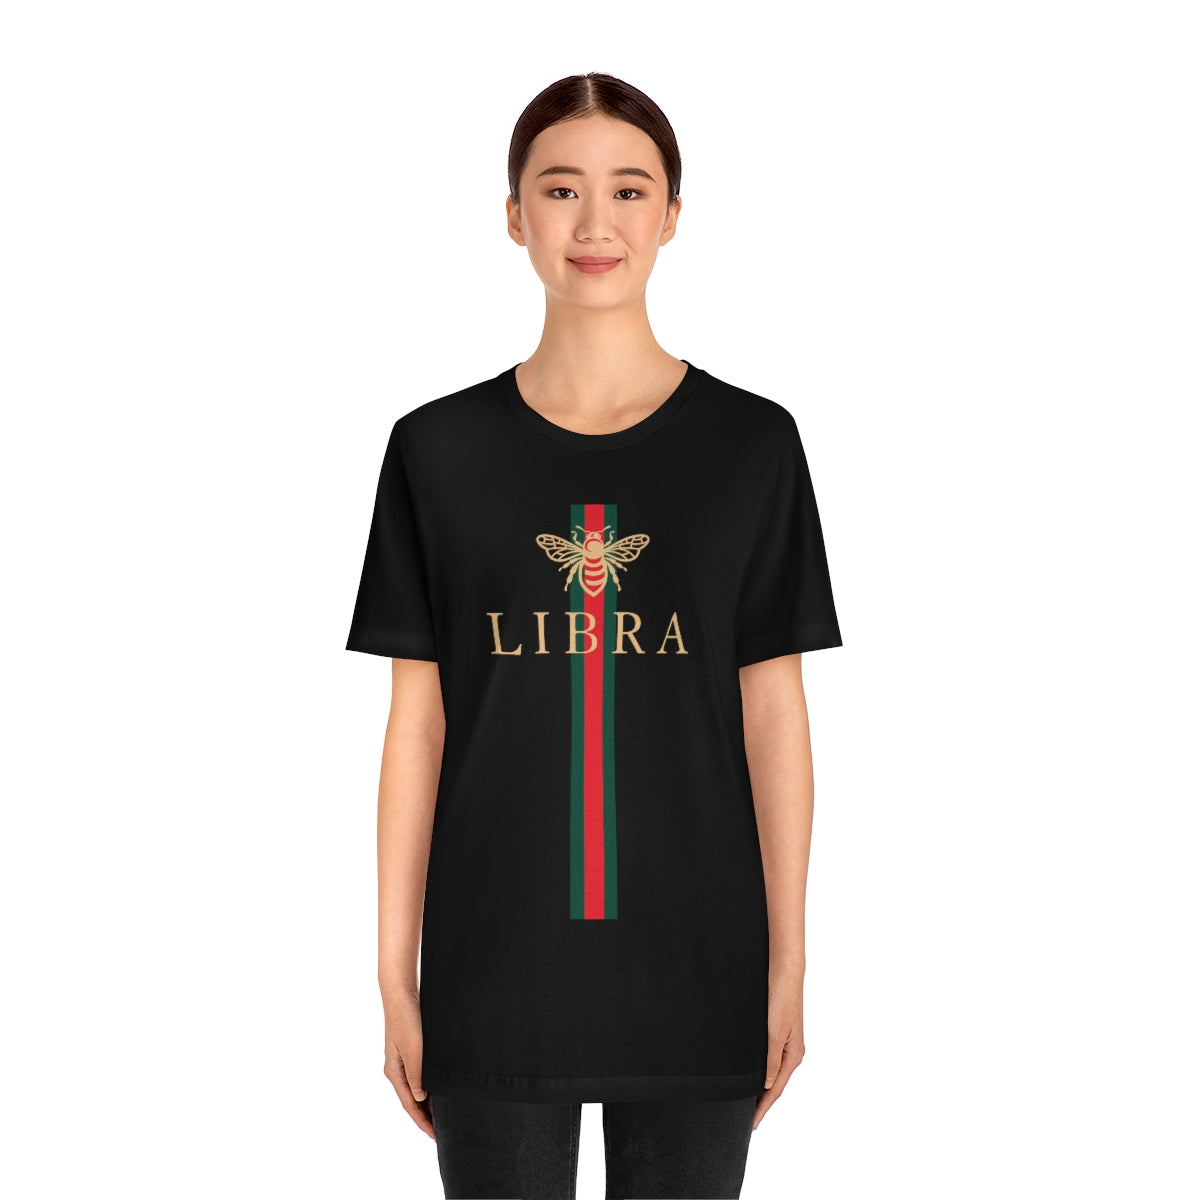 Libra Bee Girl Shirt